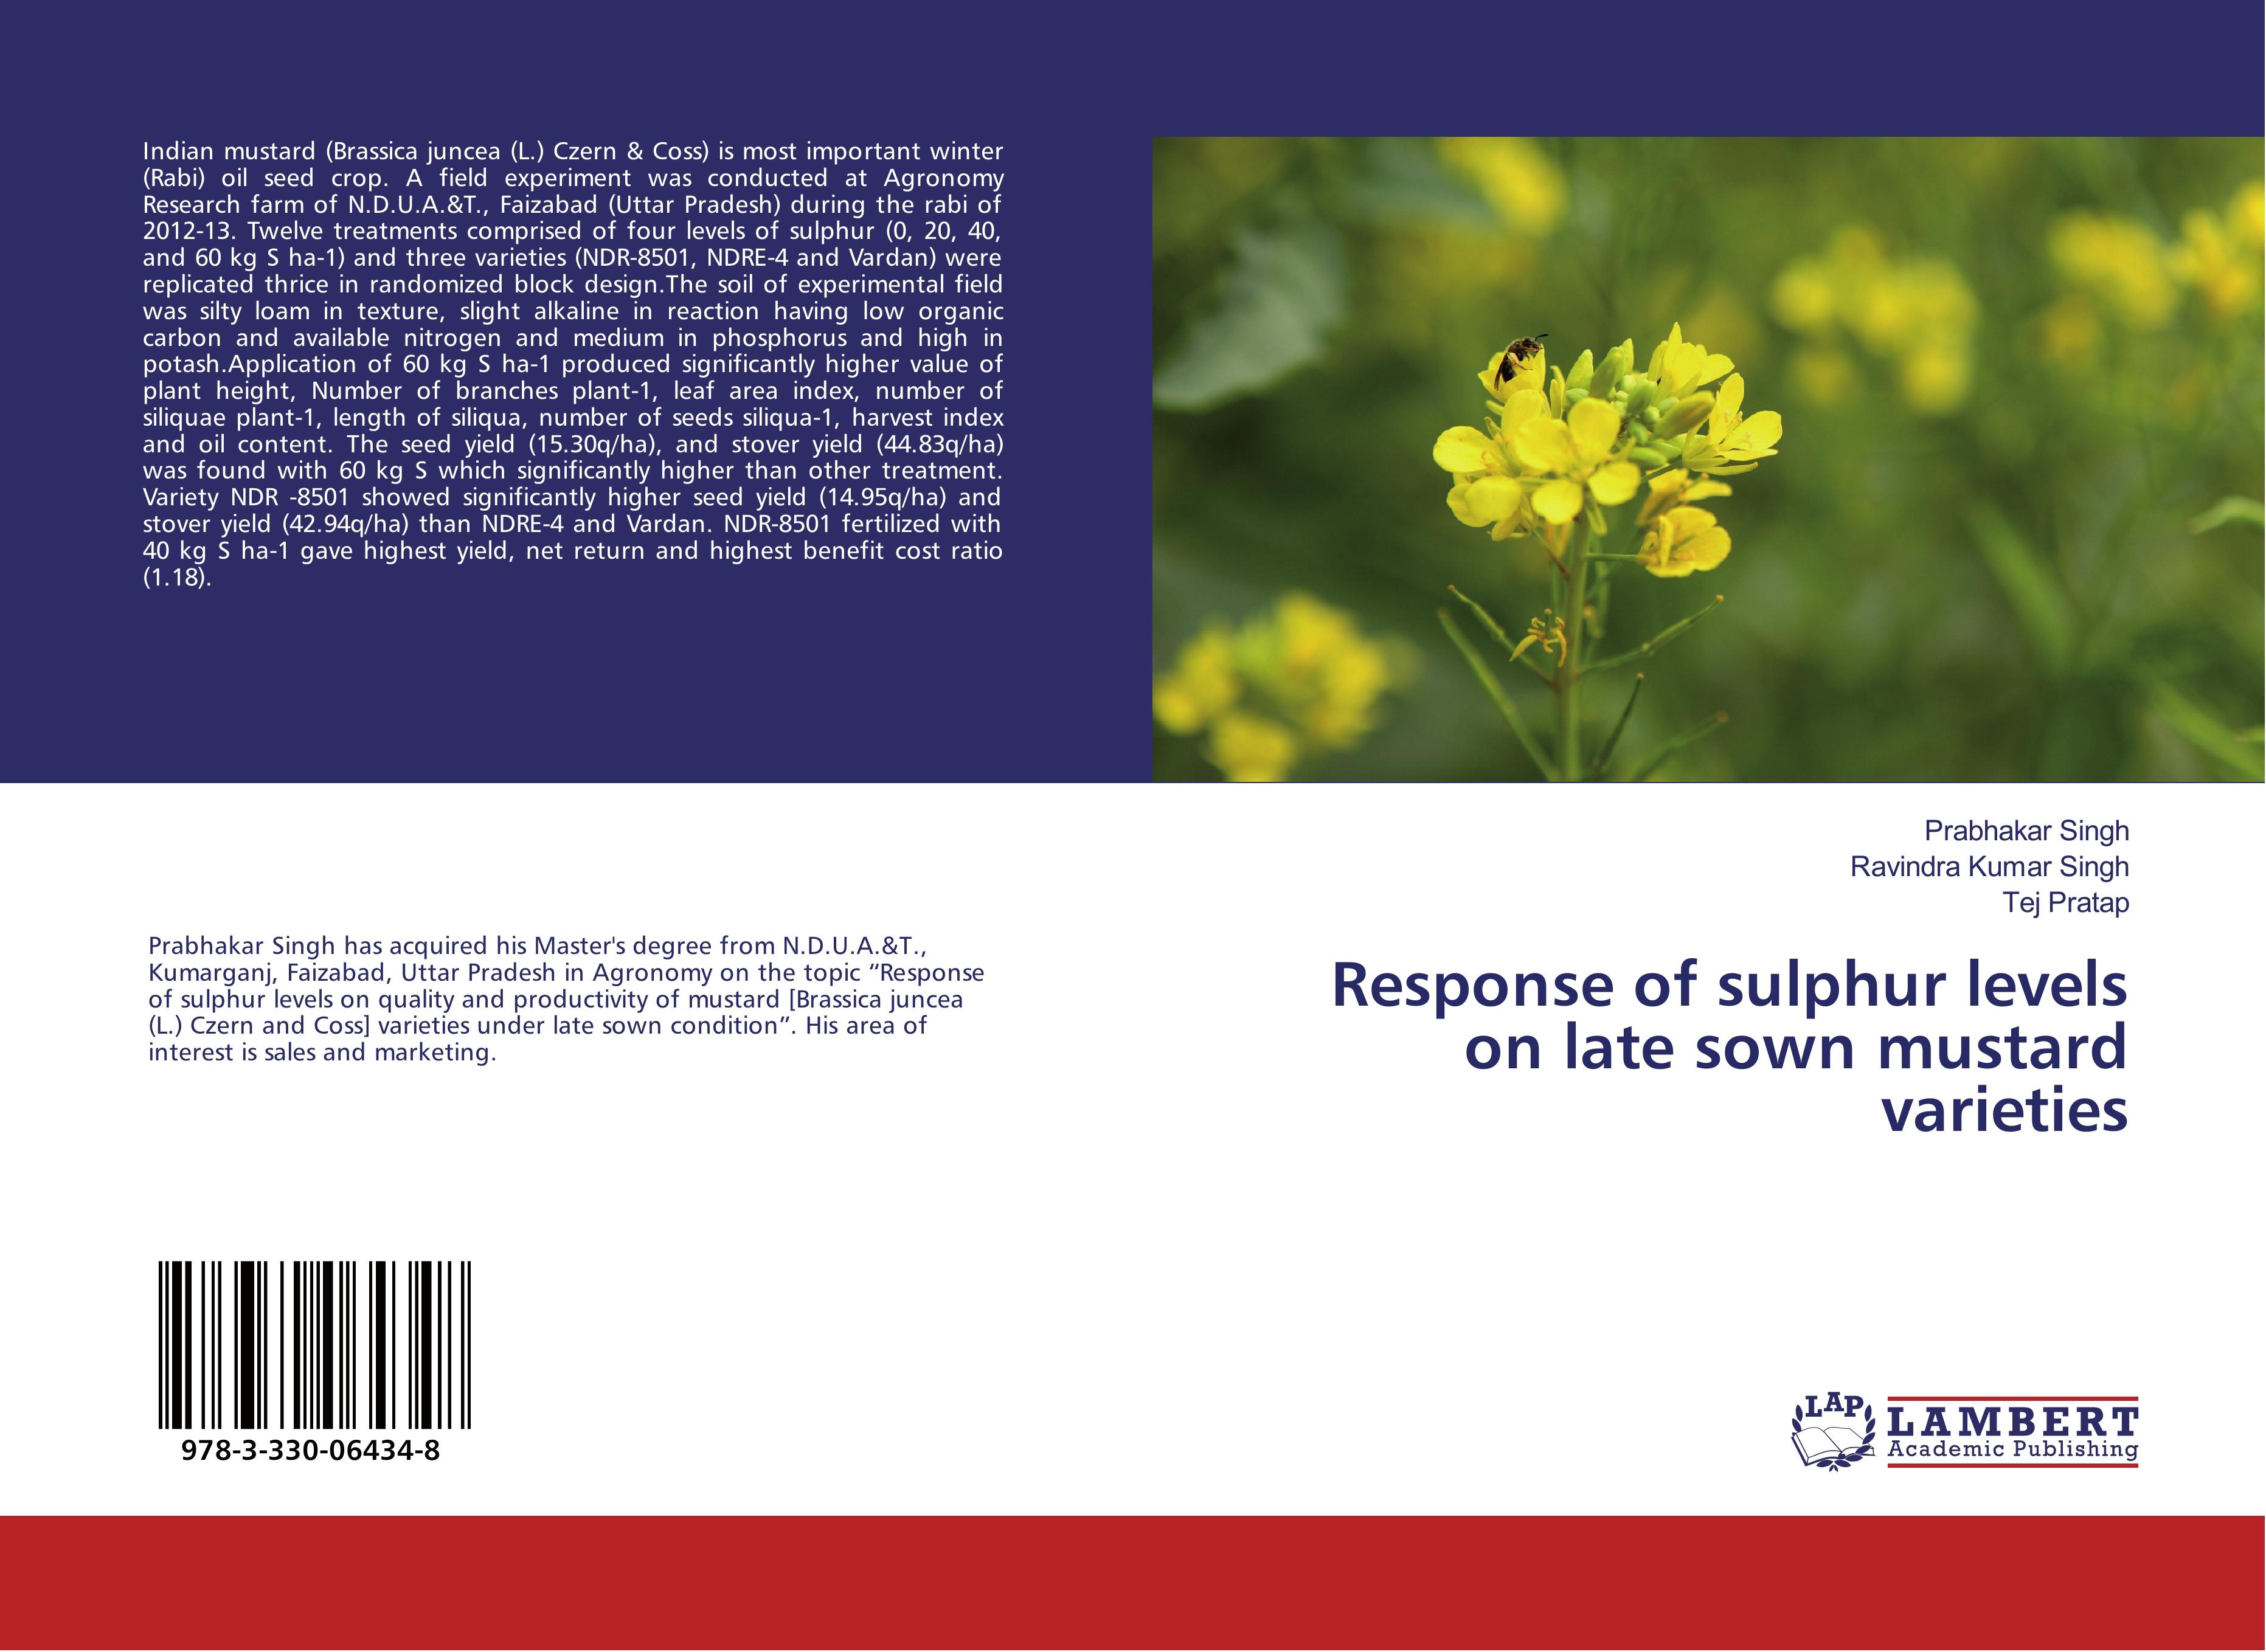 Response of sulphur levels on late sown mustard varieties - Singh, Prabhakar|Singh, Ravindra Kumar|Pratap, Tej